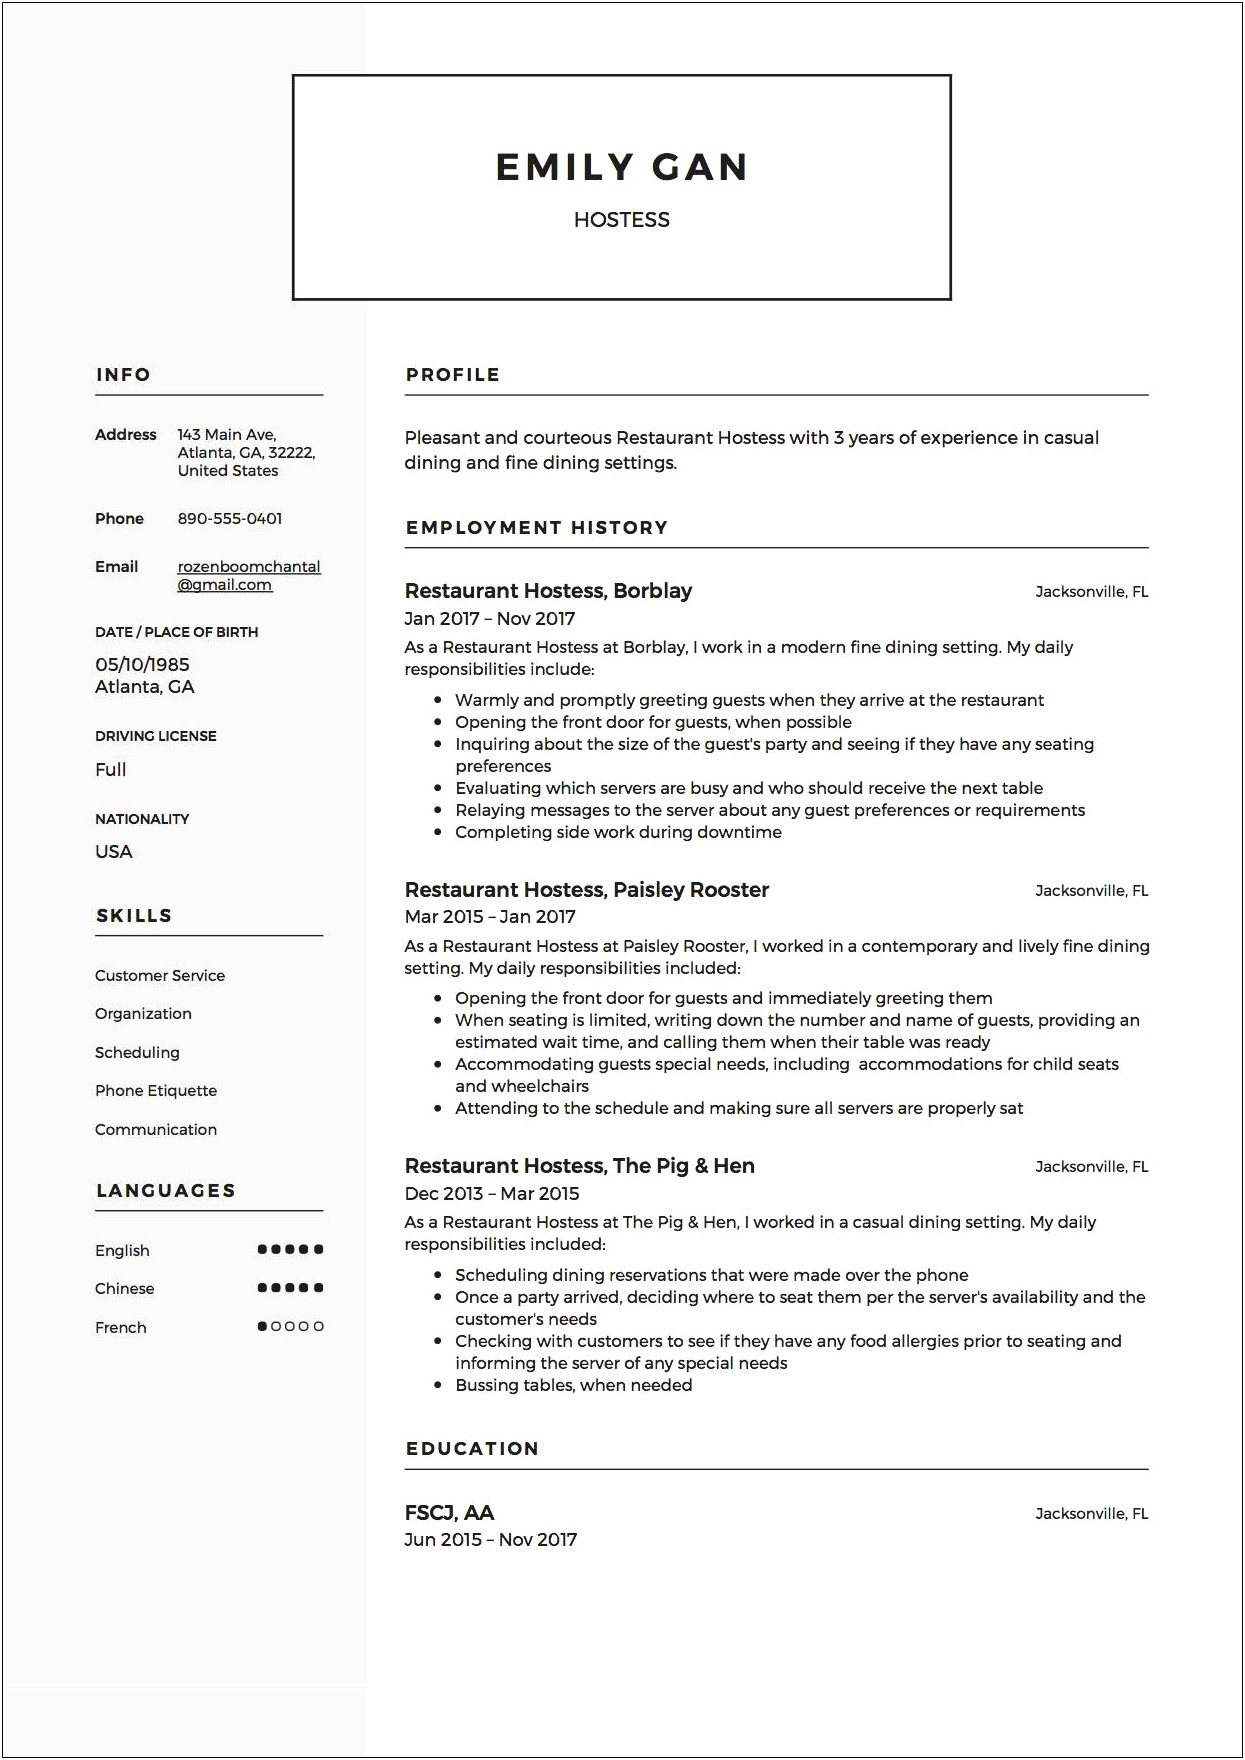 Resume Summary Samples For Host